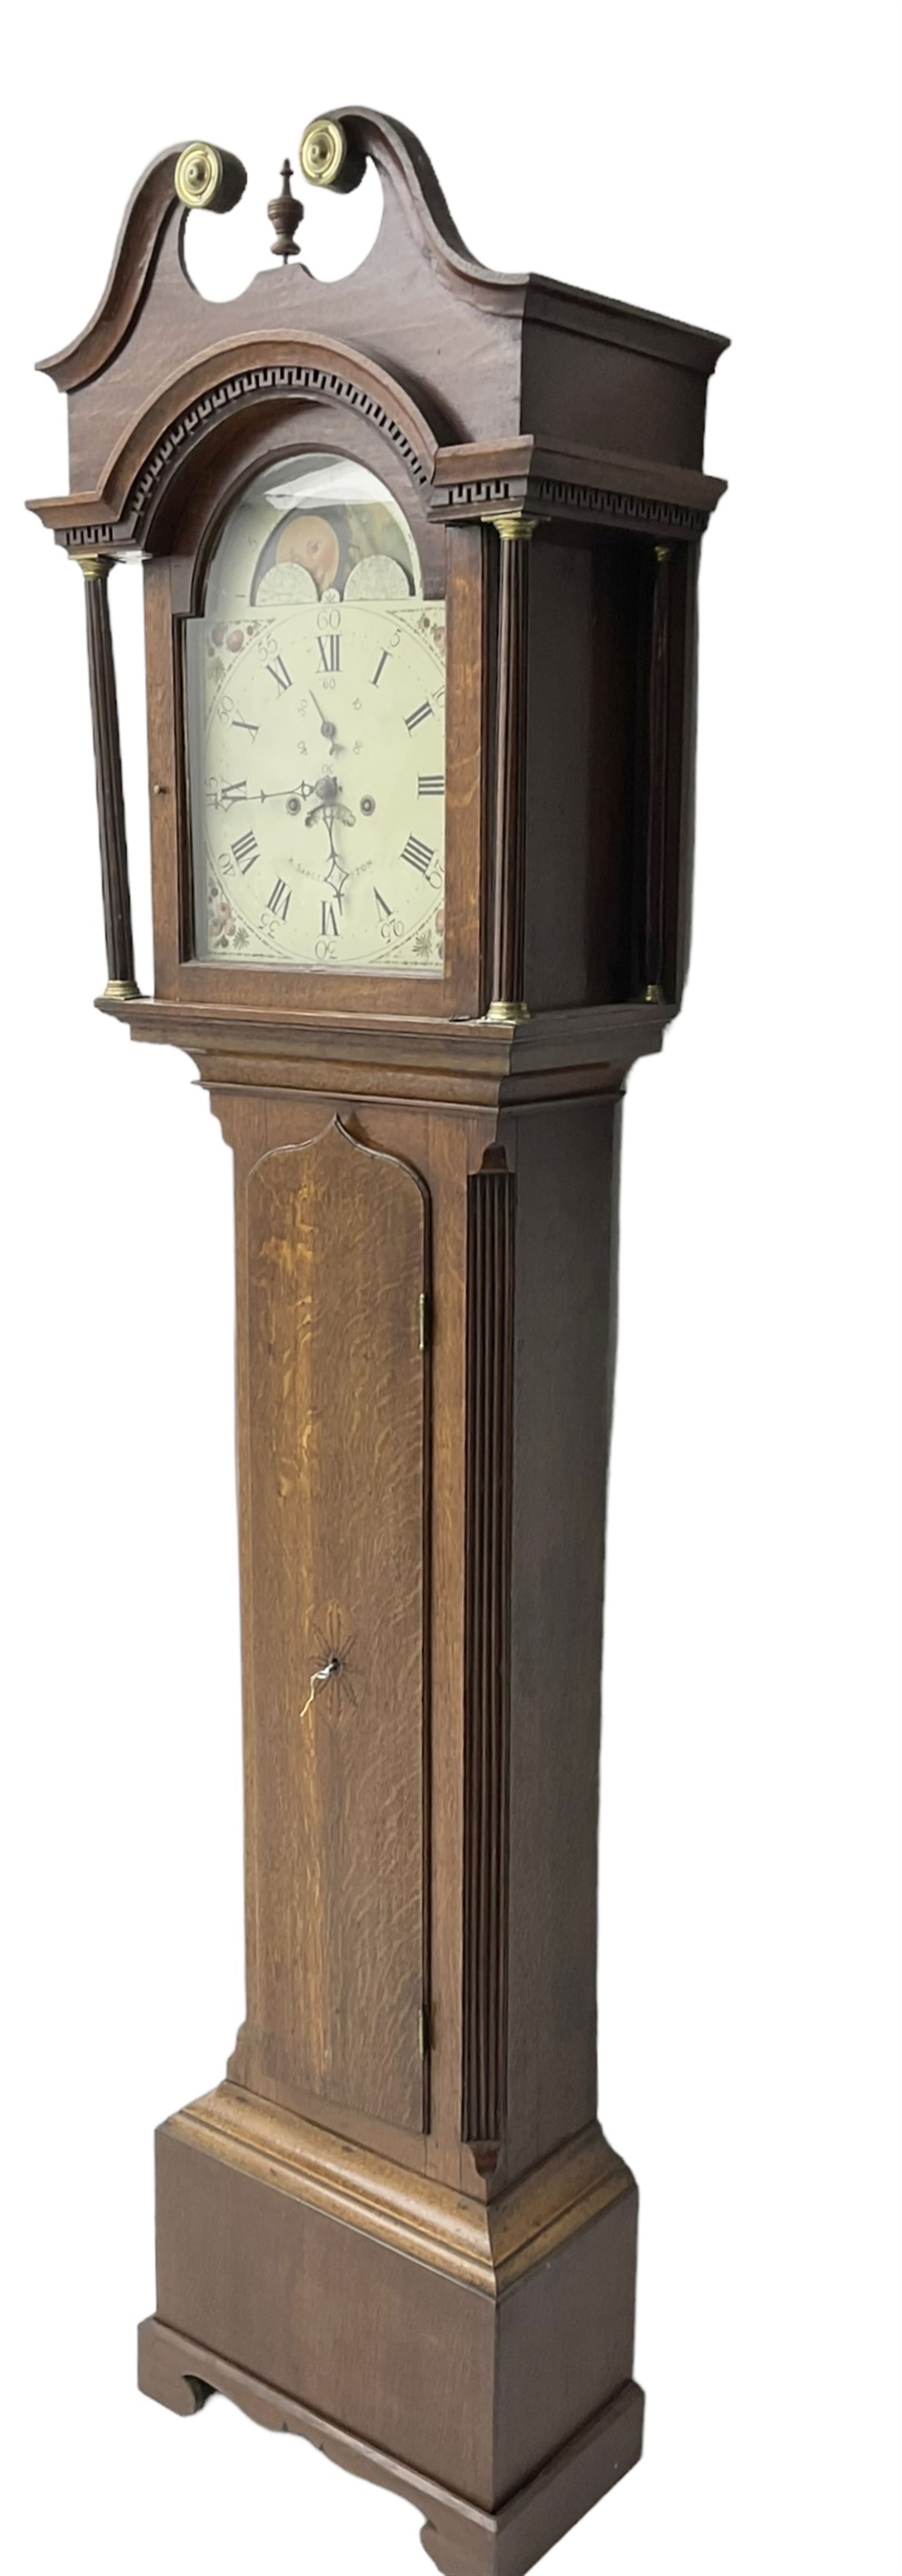 W Sargent of Boston (Lincs) - late 18th century oak cased 8-day longcase clock - Image 4 of 7